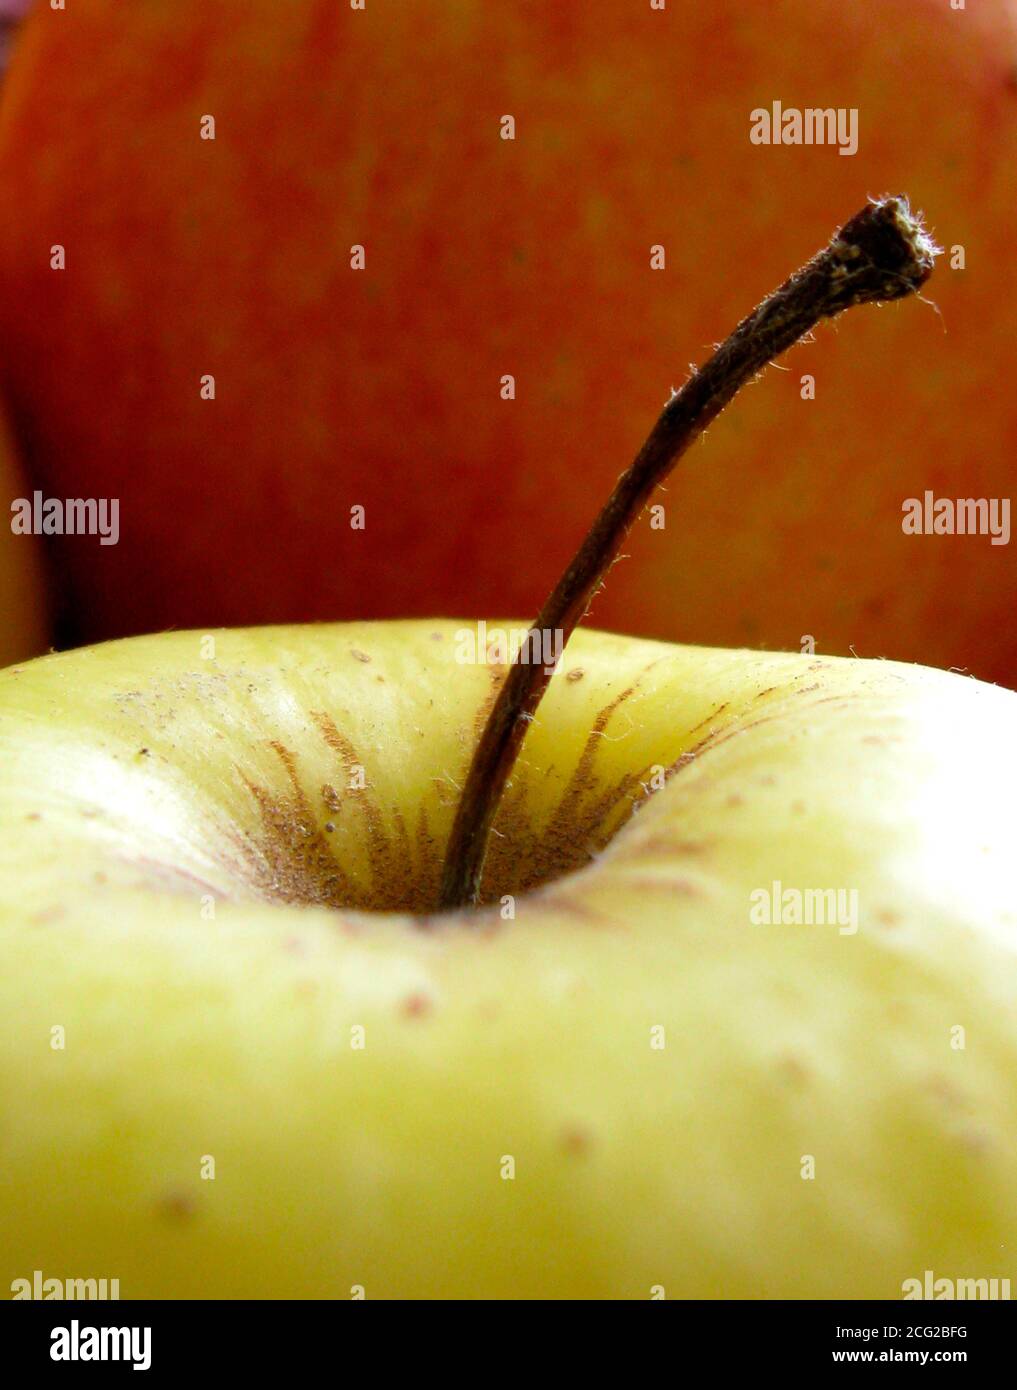 yellow apple Stock Photo